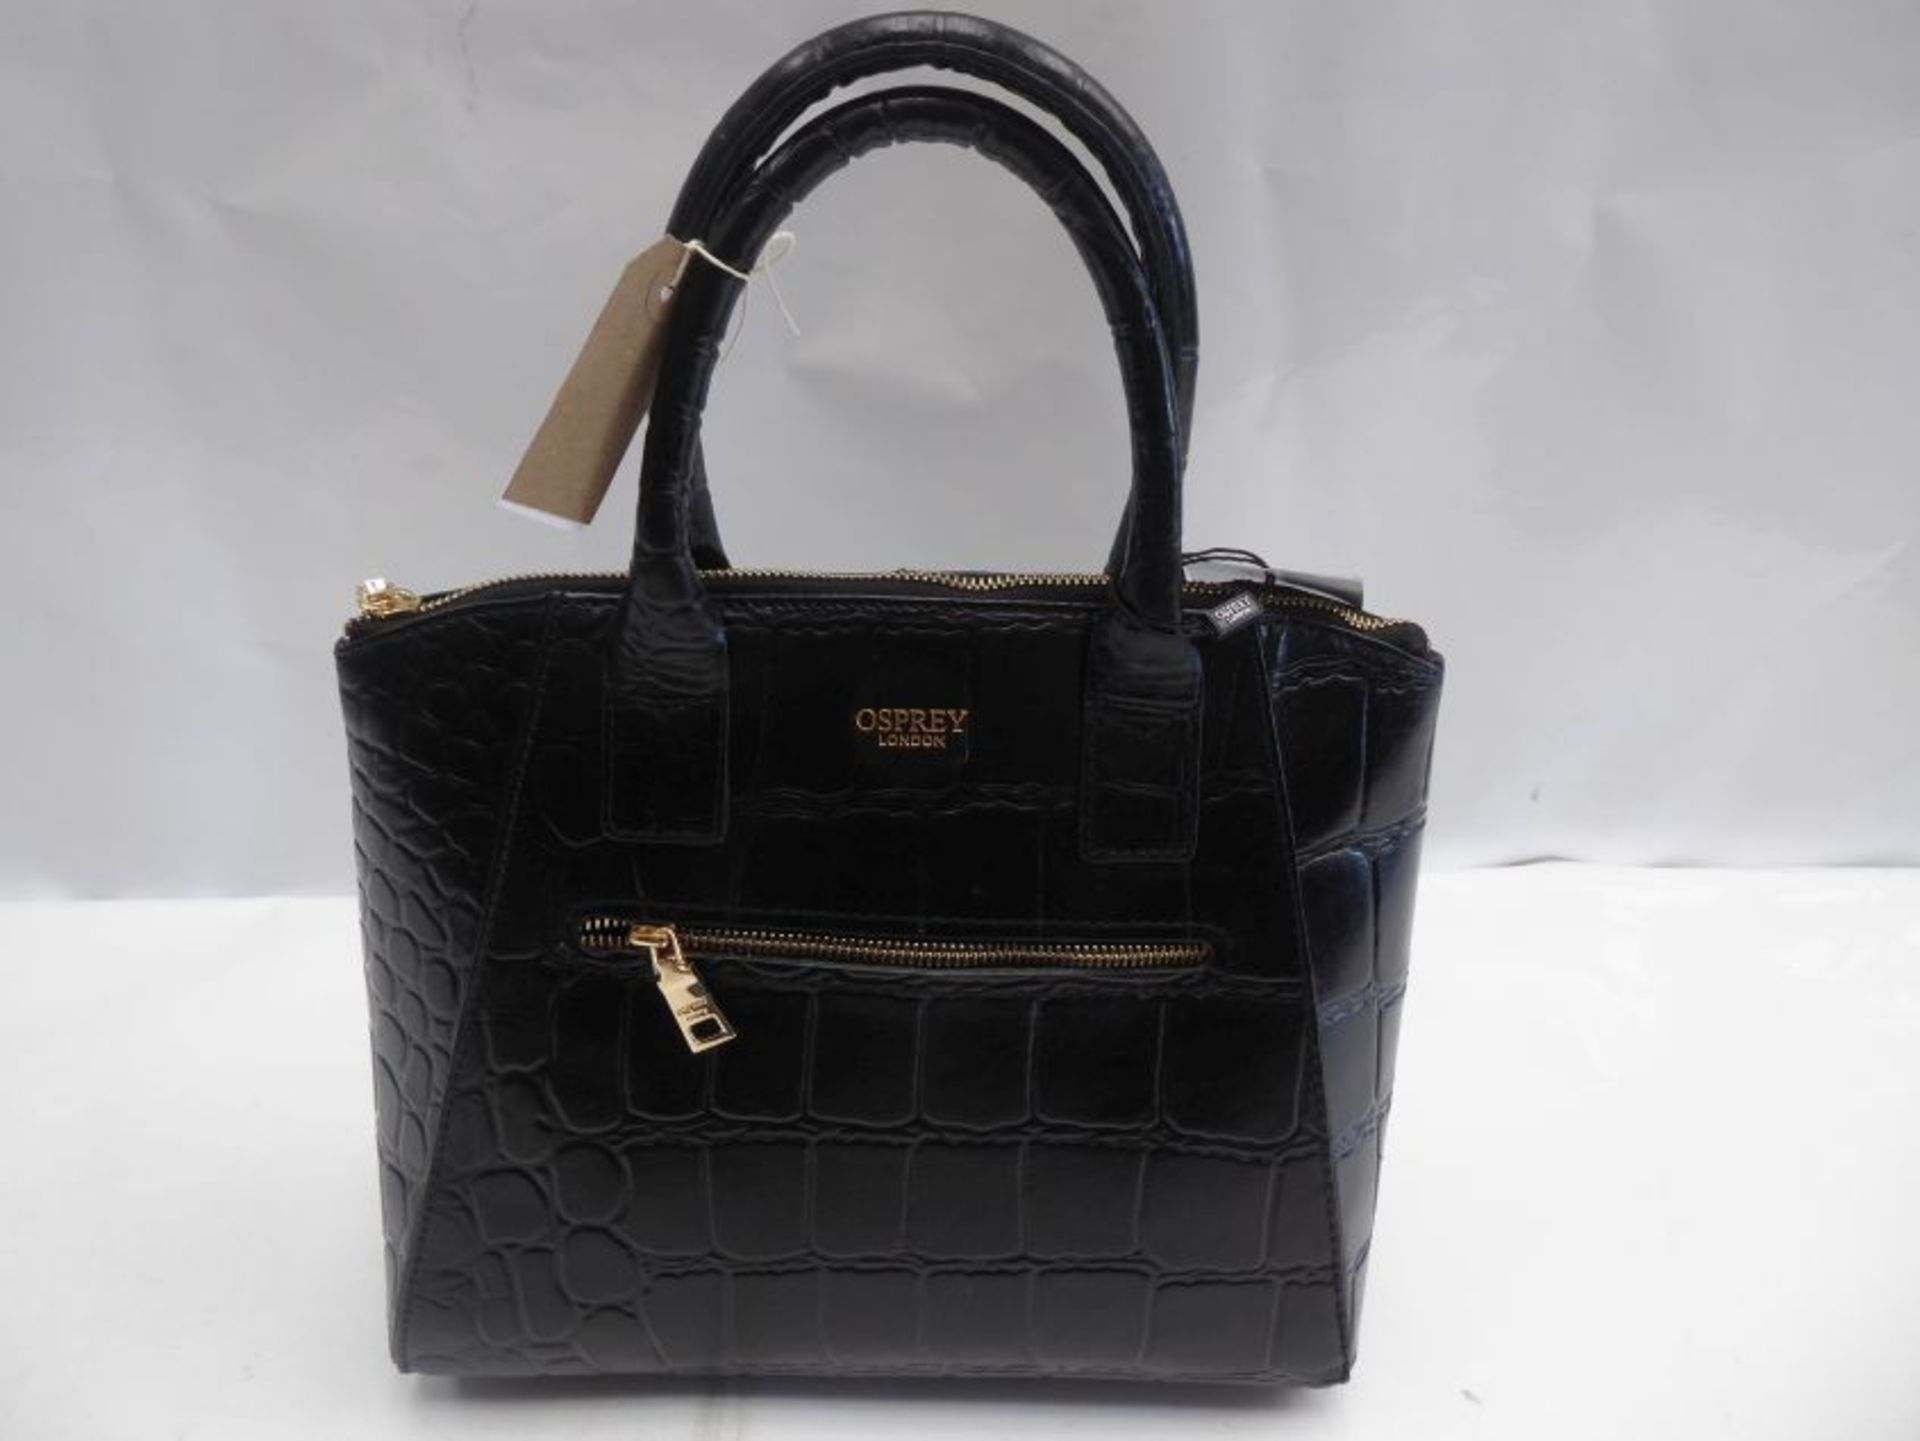 Osprey of London black faux crocodile skin handbag